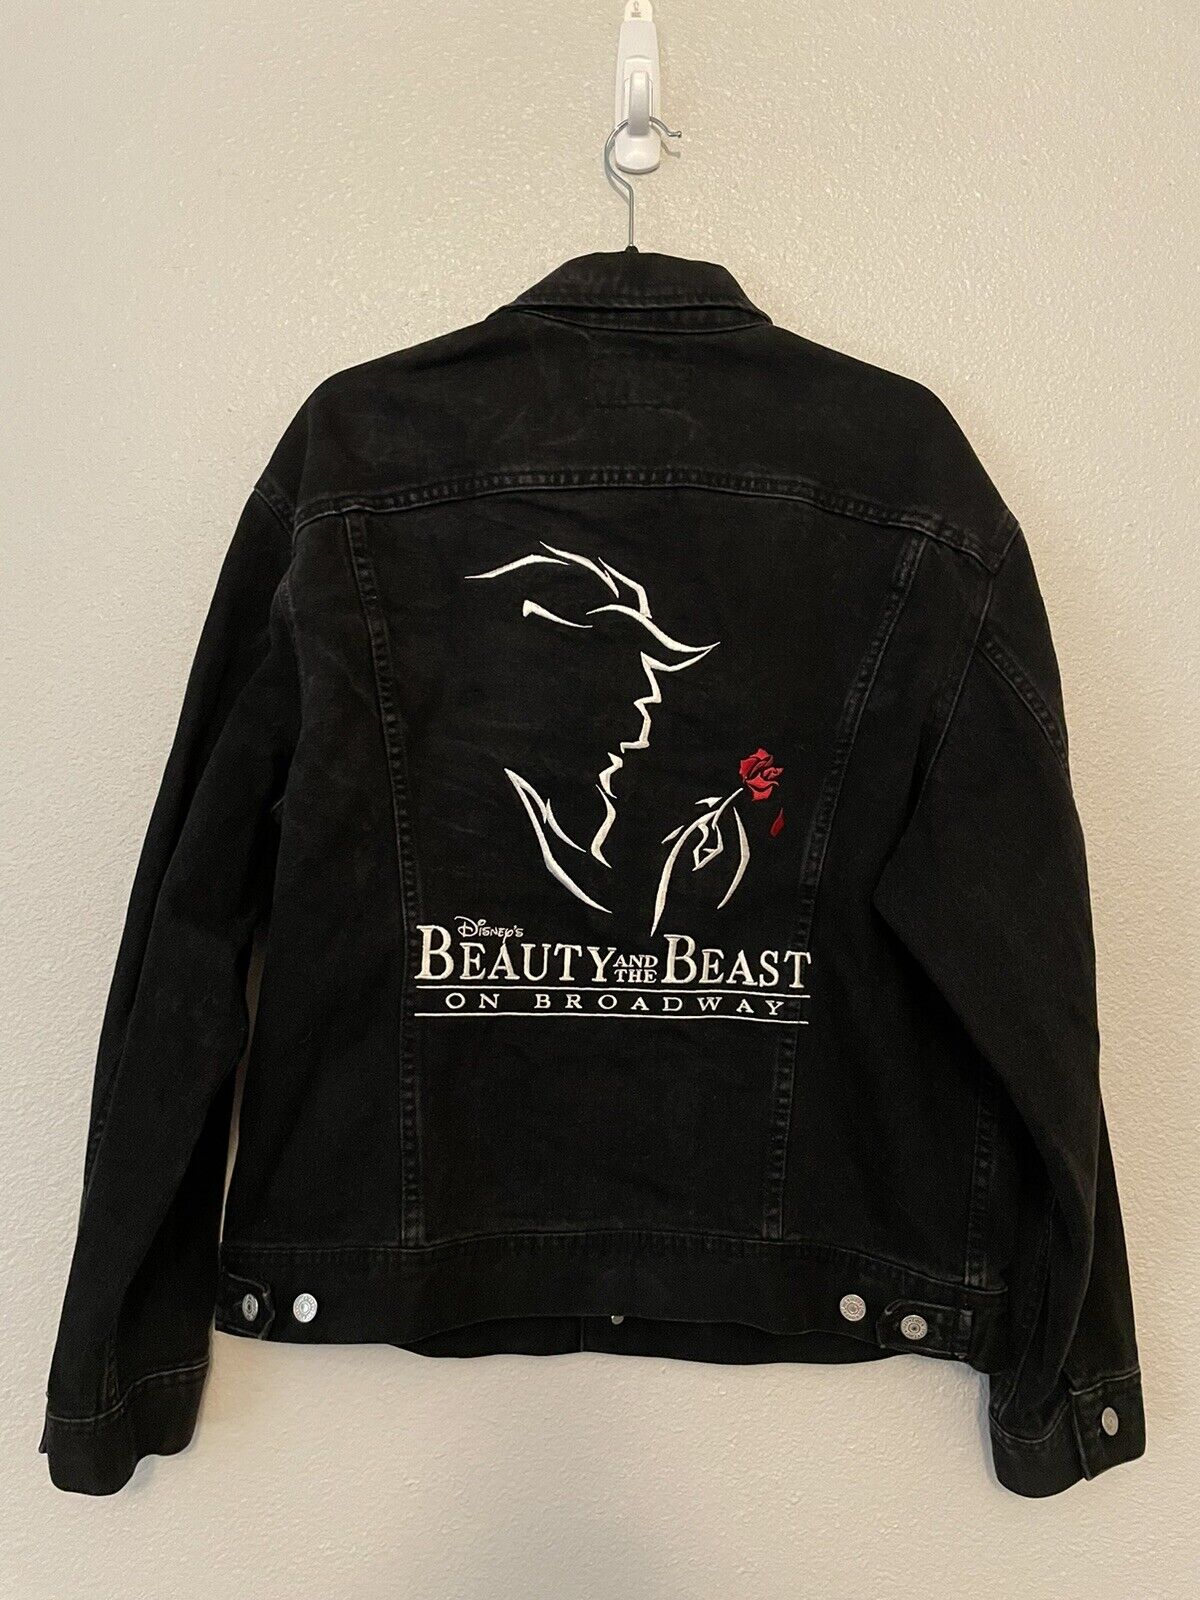 Disney's Beauty and the Beast Broadway Denim Jacket Black · Size Large USA Made